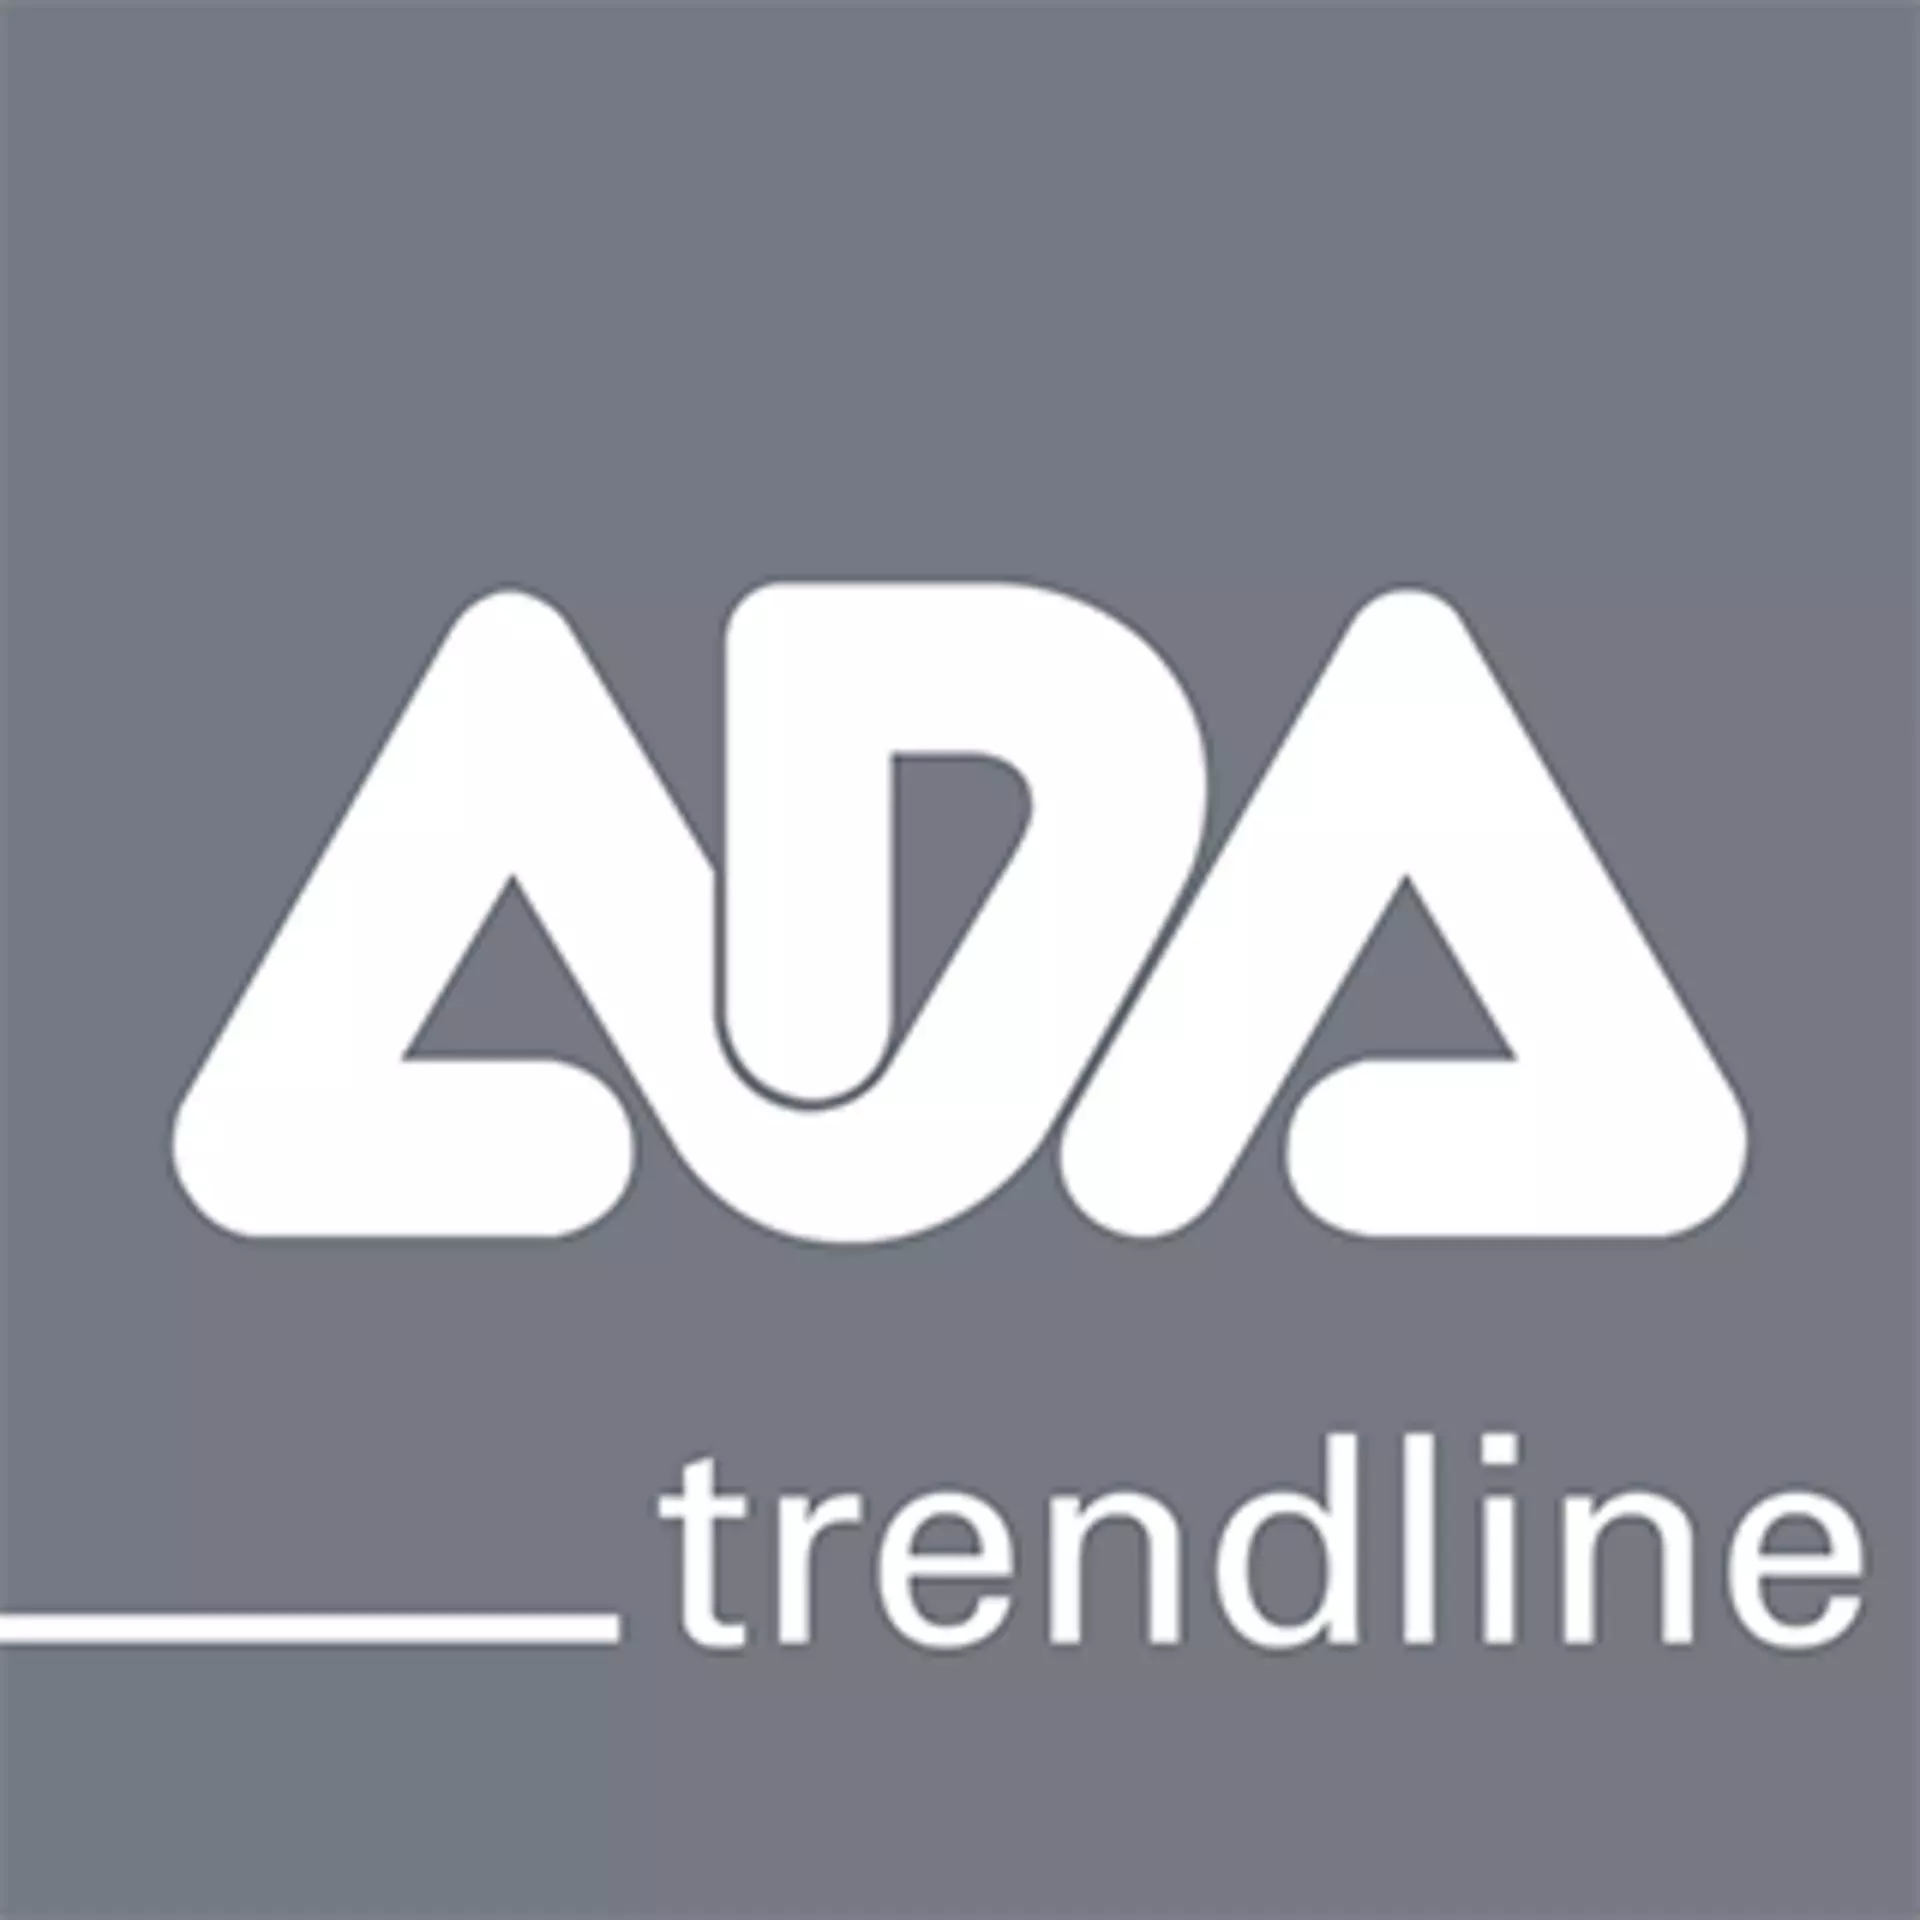 Logo ADA trendline